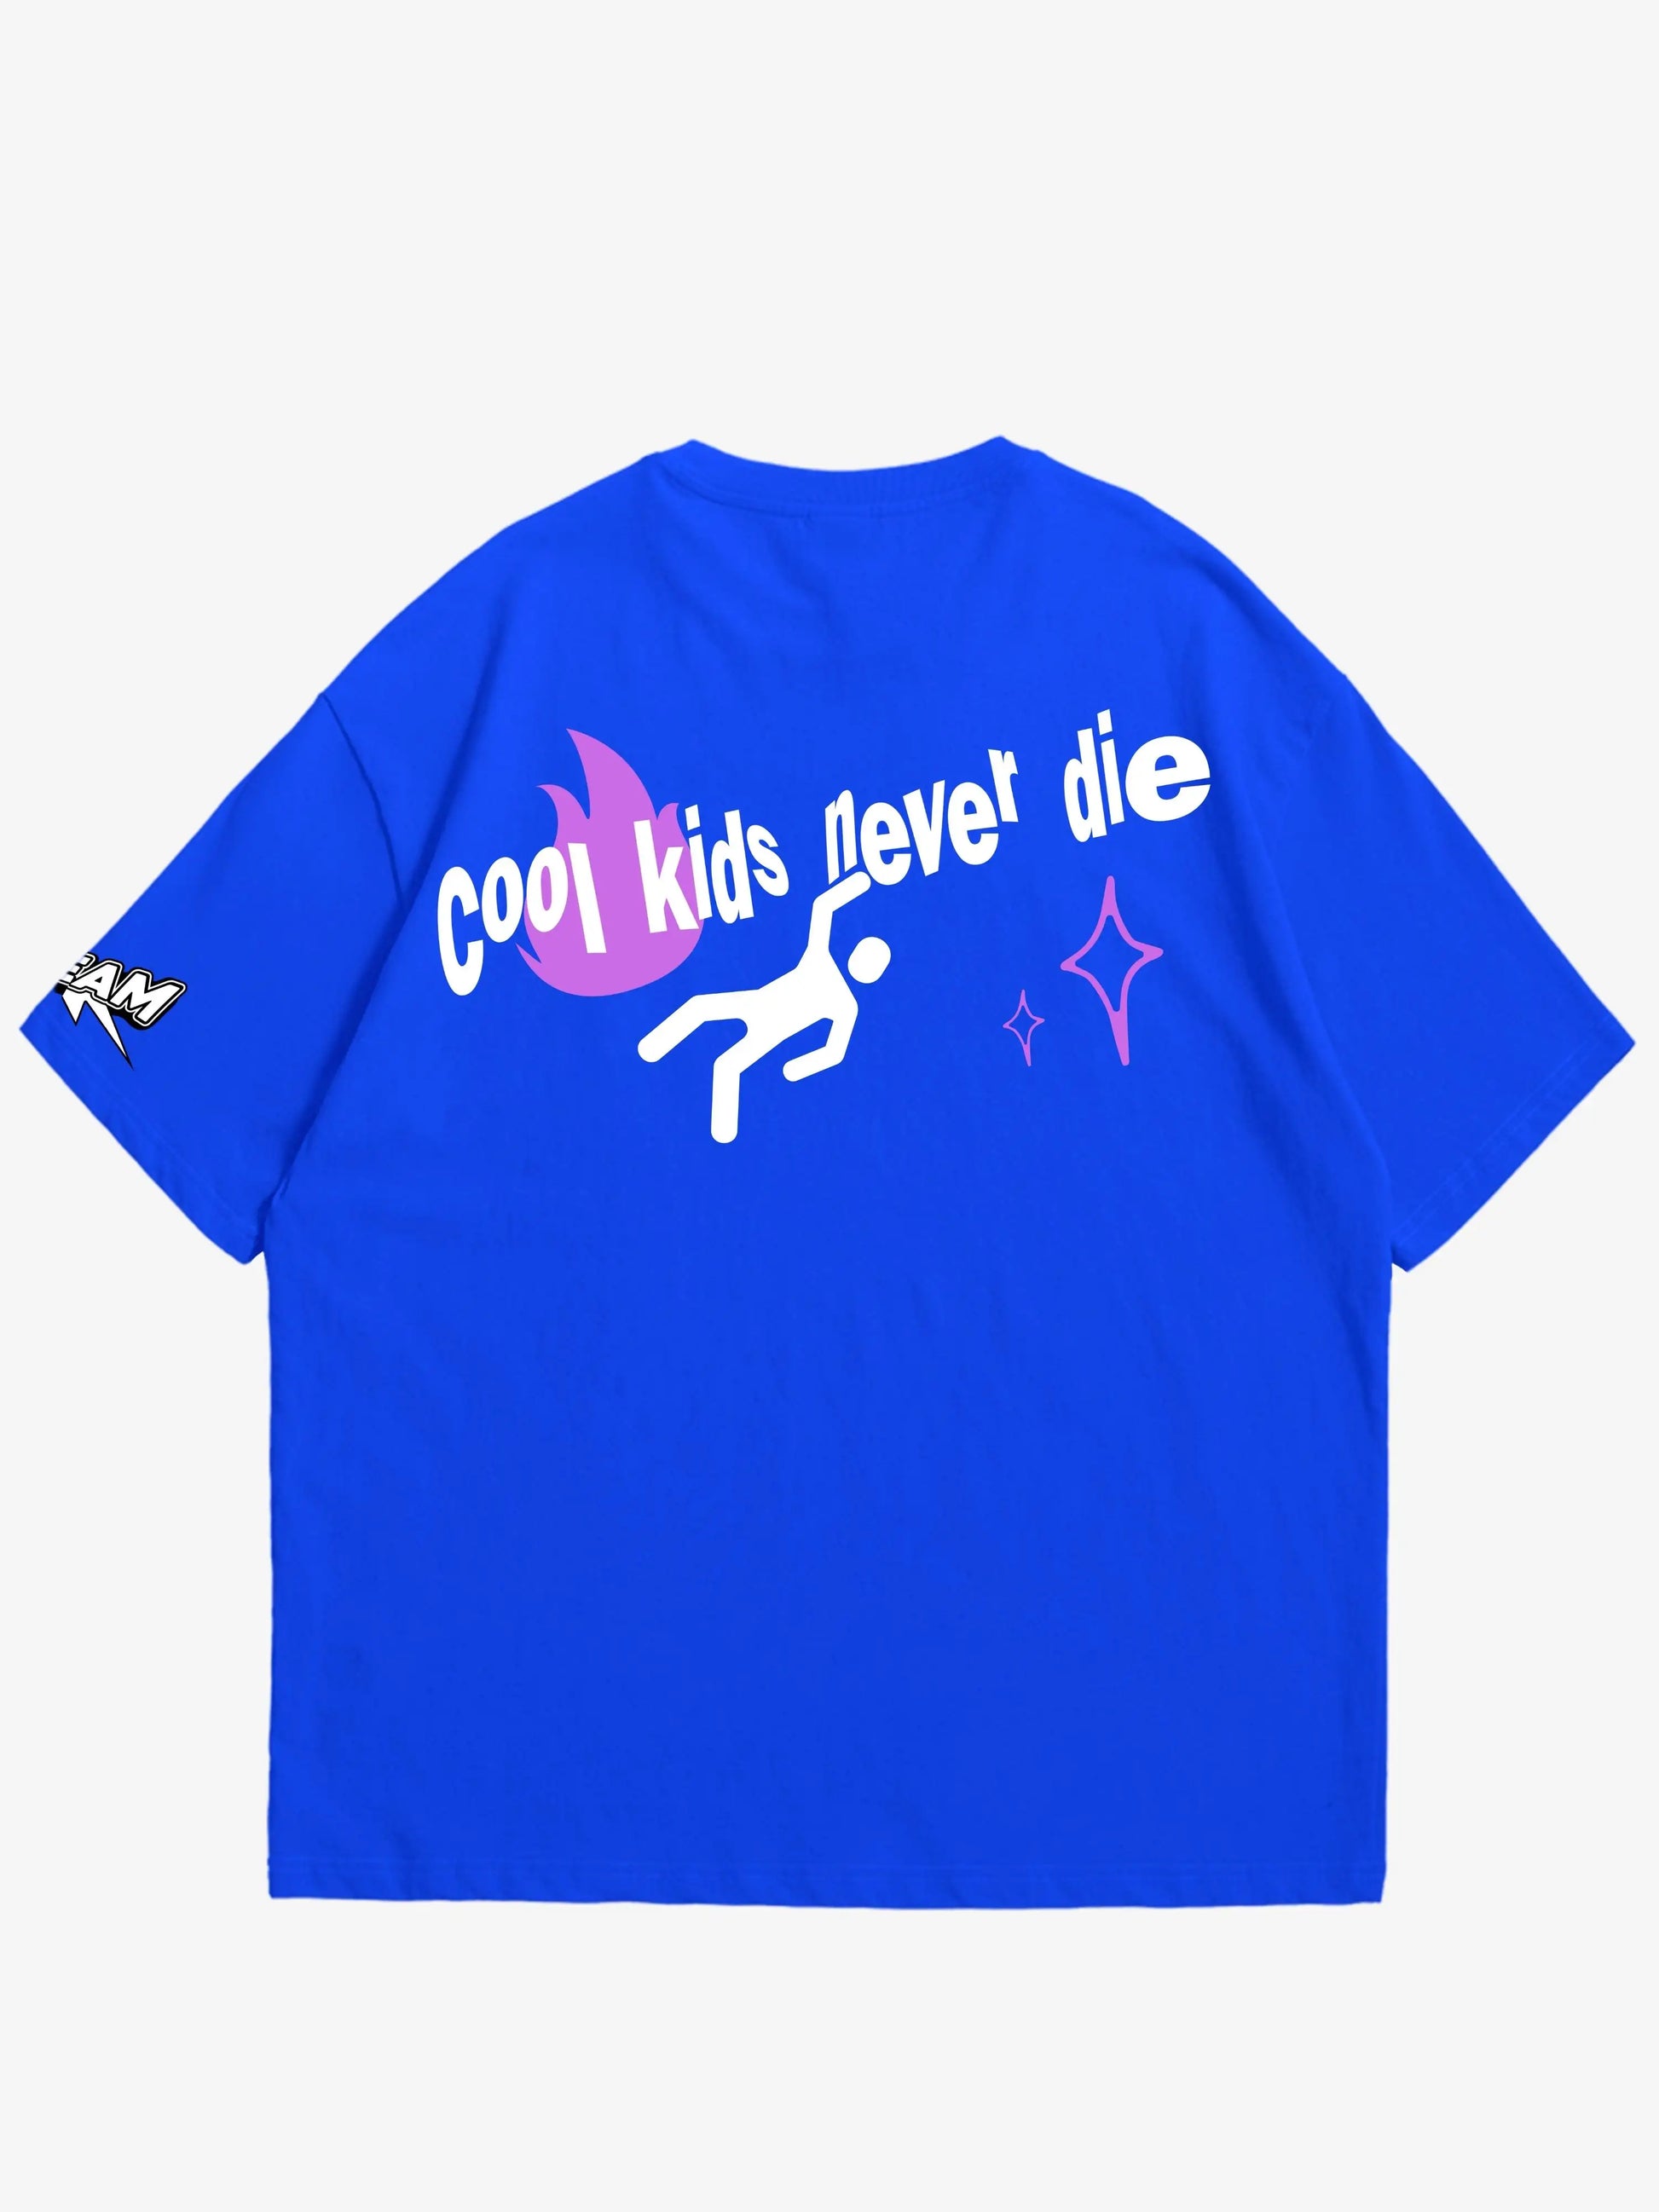 Blue oversized T-shirt, cool kids y2k print, skream streetwear t-shirt 